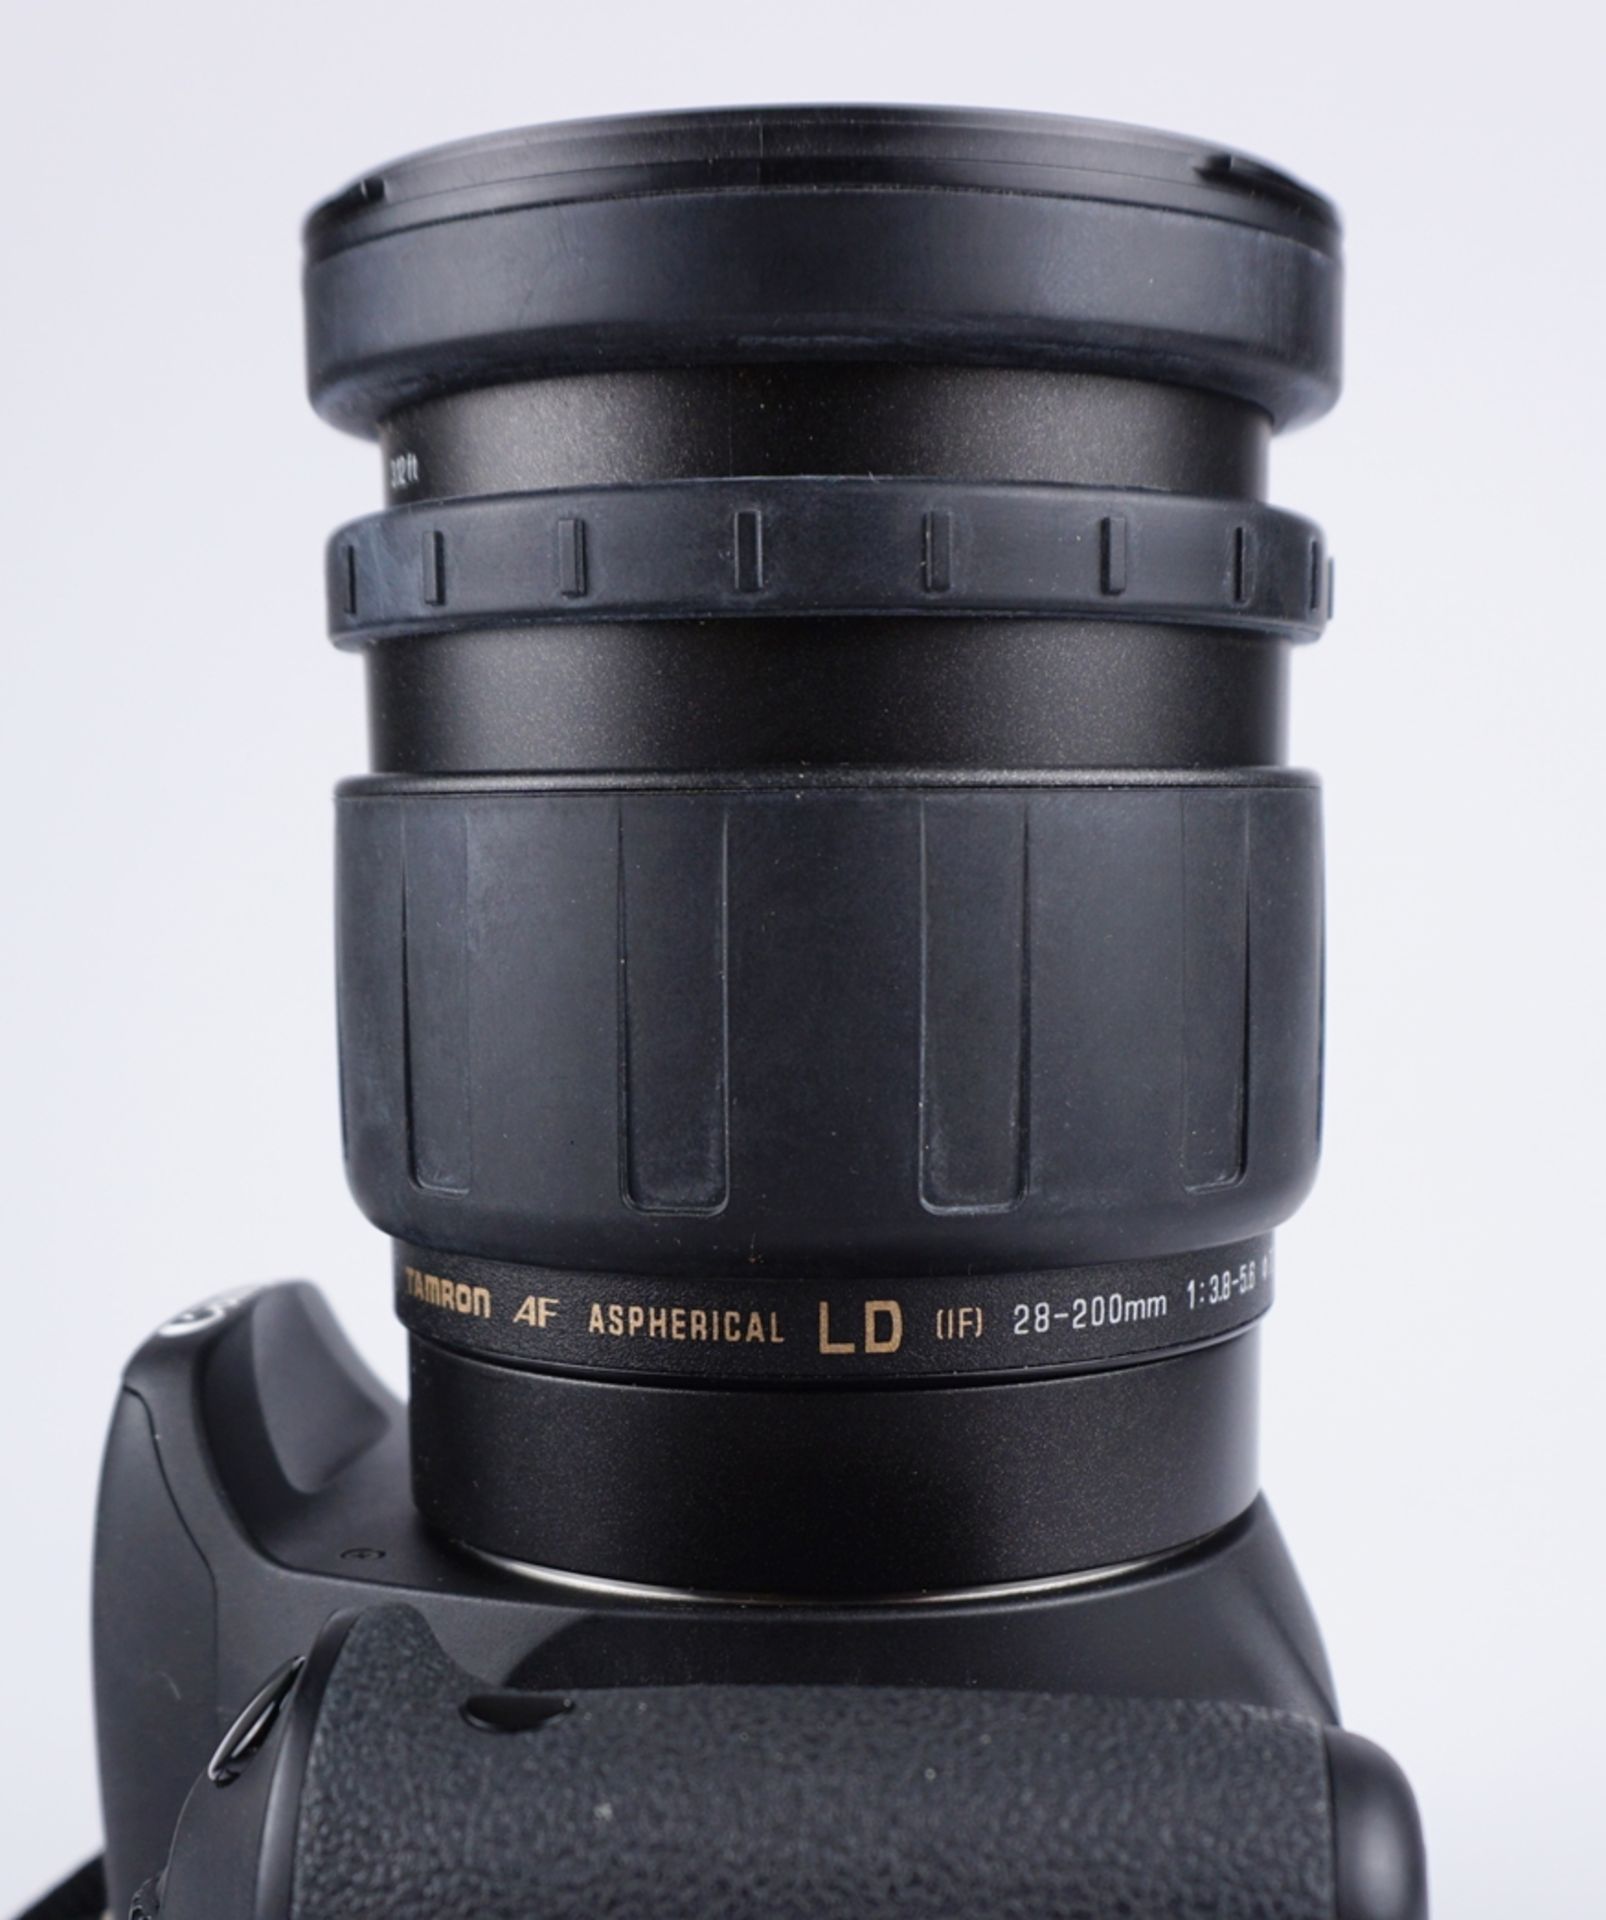 Spiegelreflexkamera Canon EOS 600-D mit Objektiv Tamron AF Aspherical LD, 28-200mm - Image 3 of 4